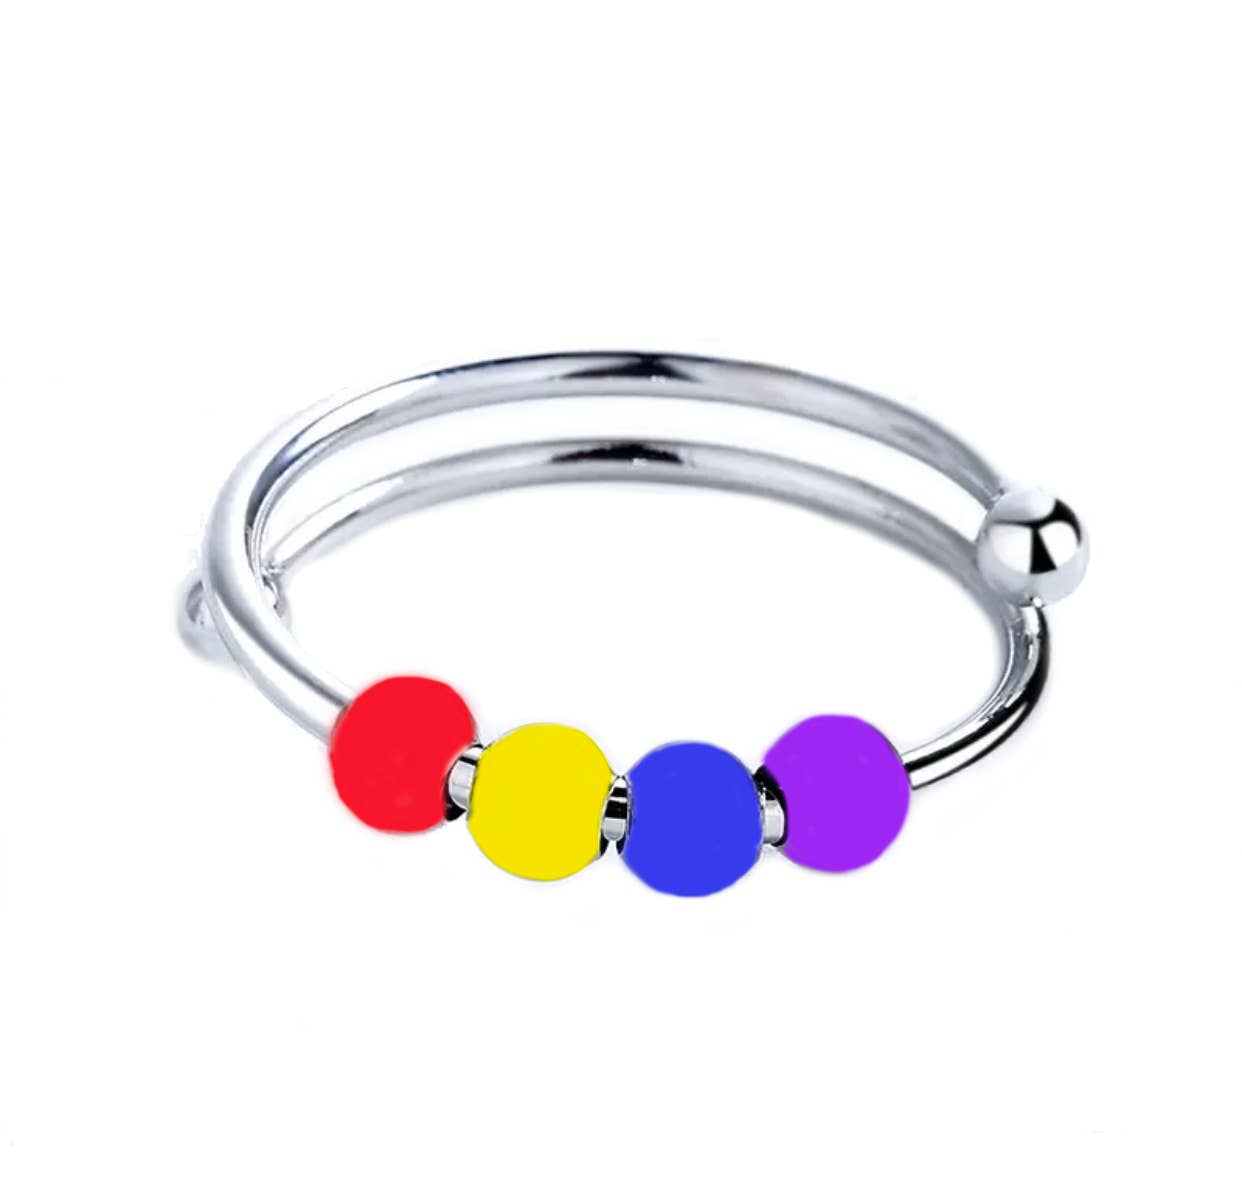 LAST CHANCE - LIMITED STOCK - Bubble Pop Fidget Ring - Tie Dye Silicon